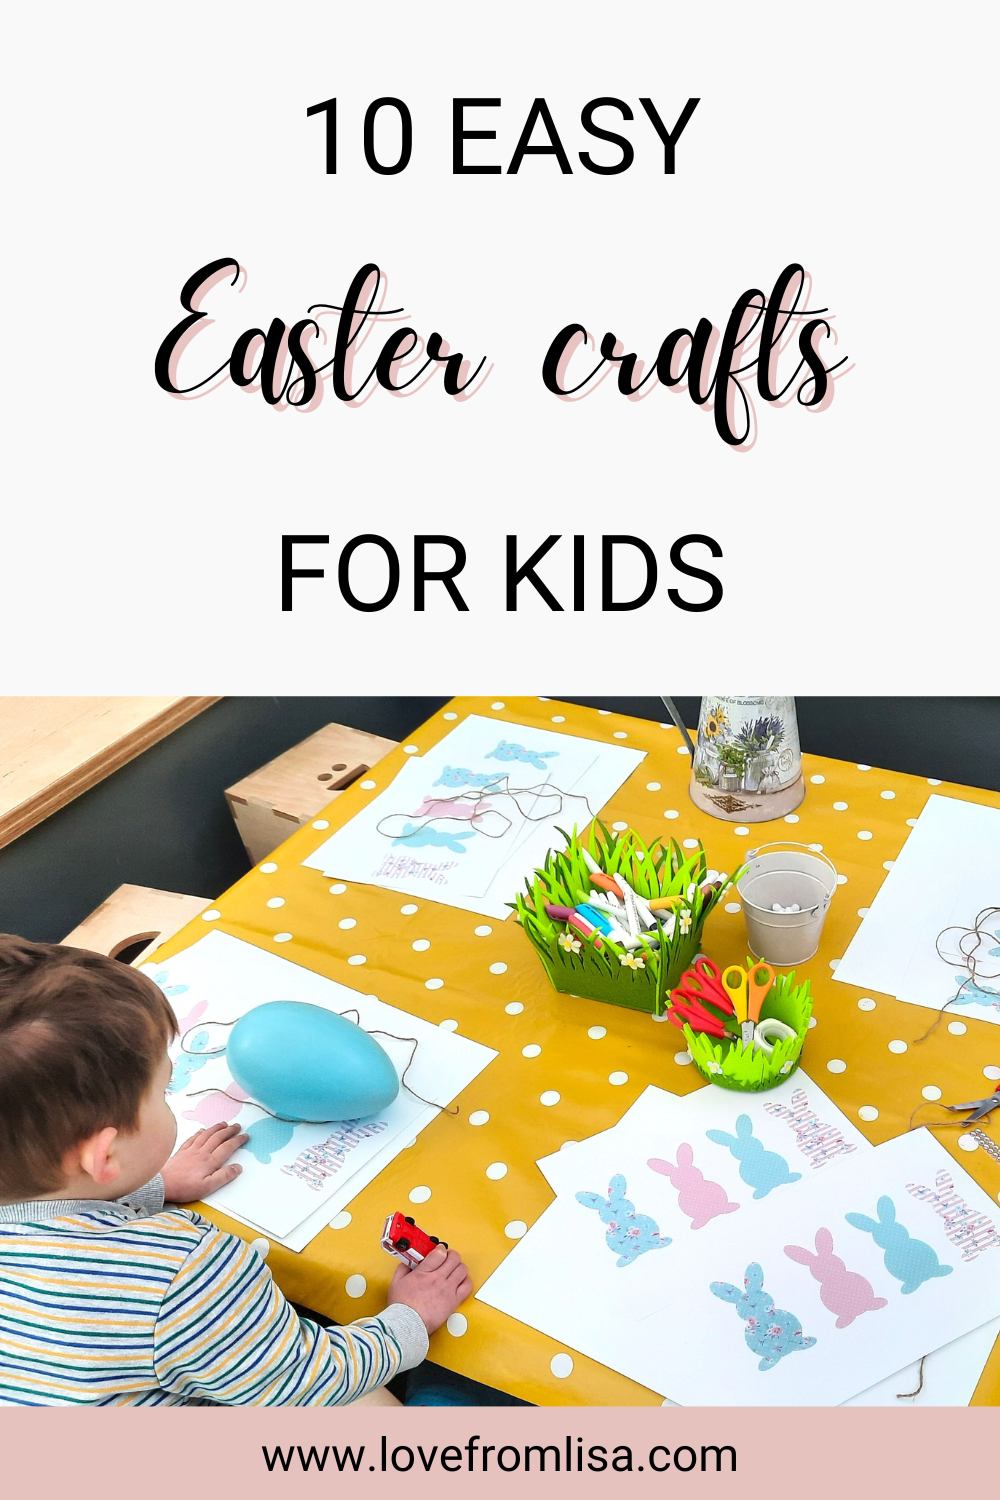 10 easy Easter crafts for kids Pinterest